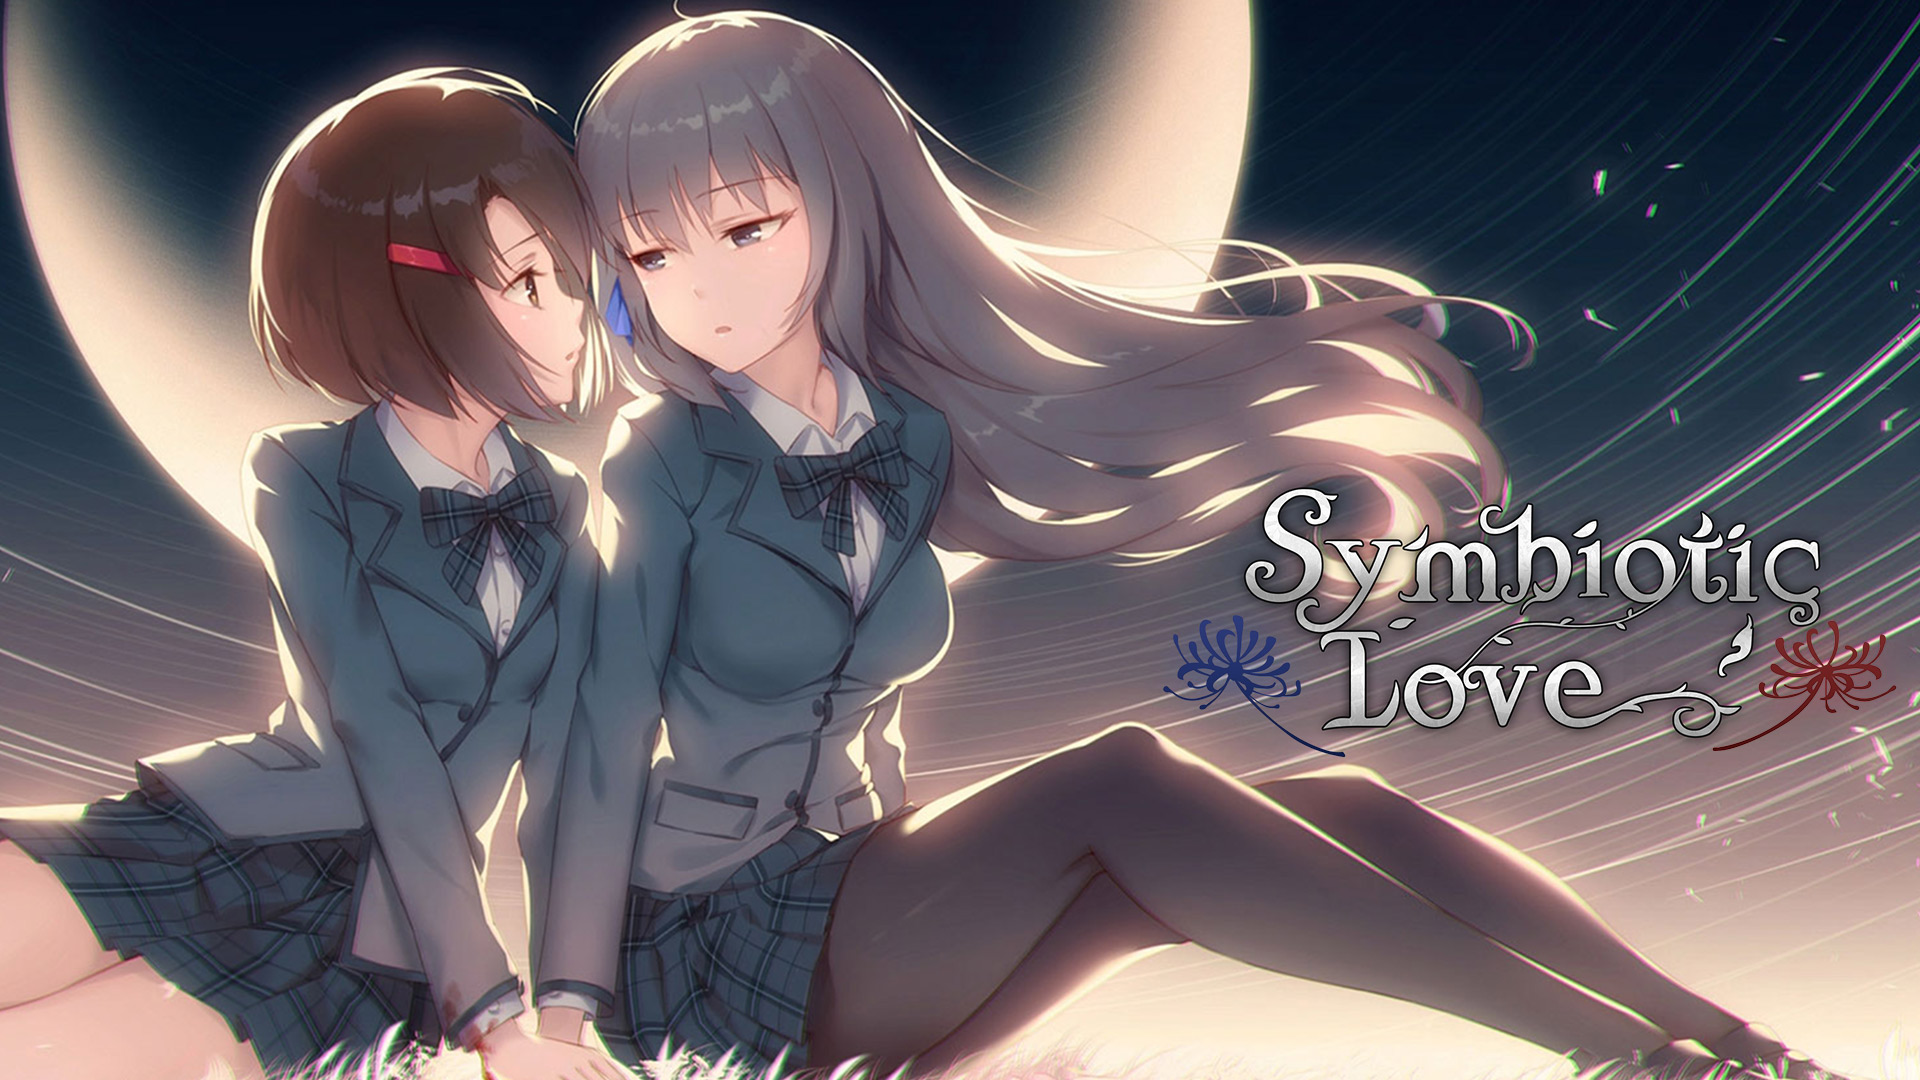 Symbiotic Love - Yuri Visual Novel